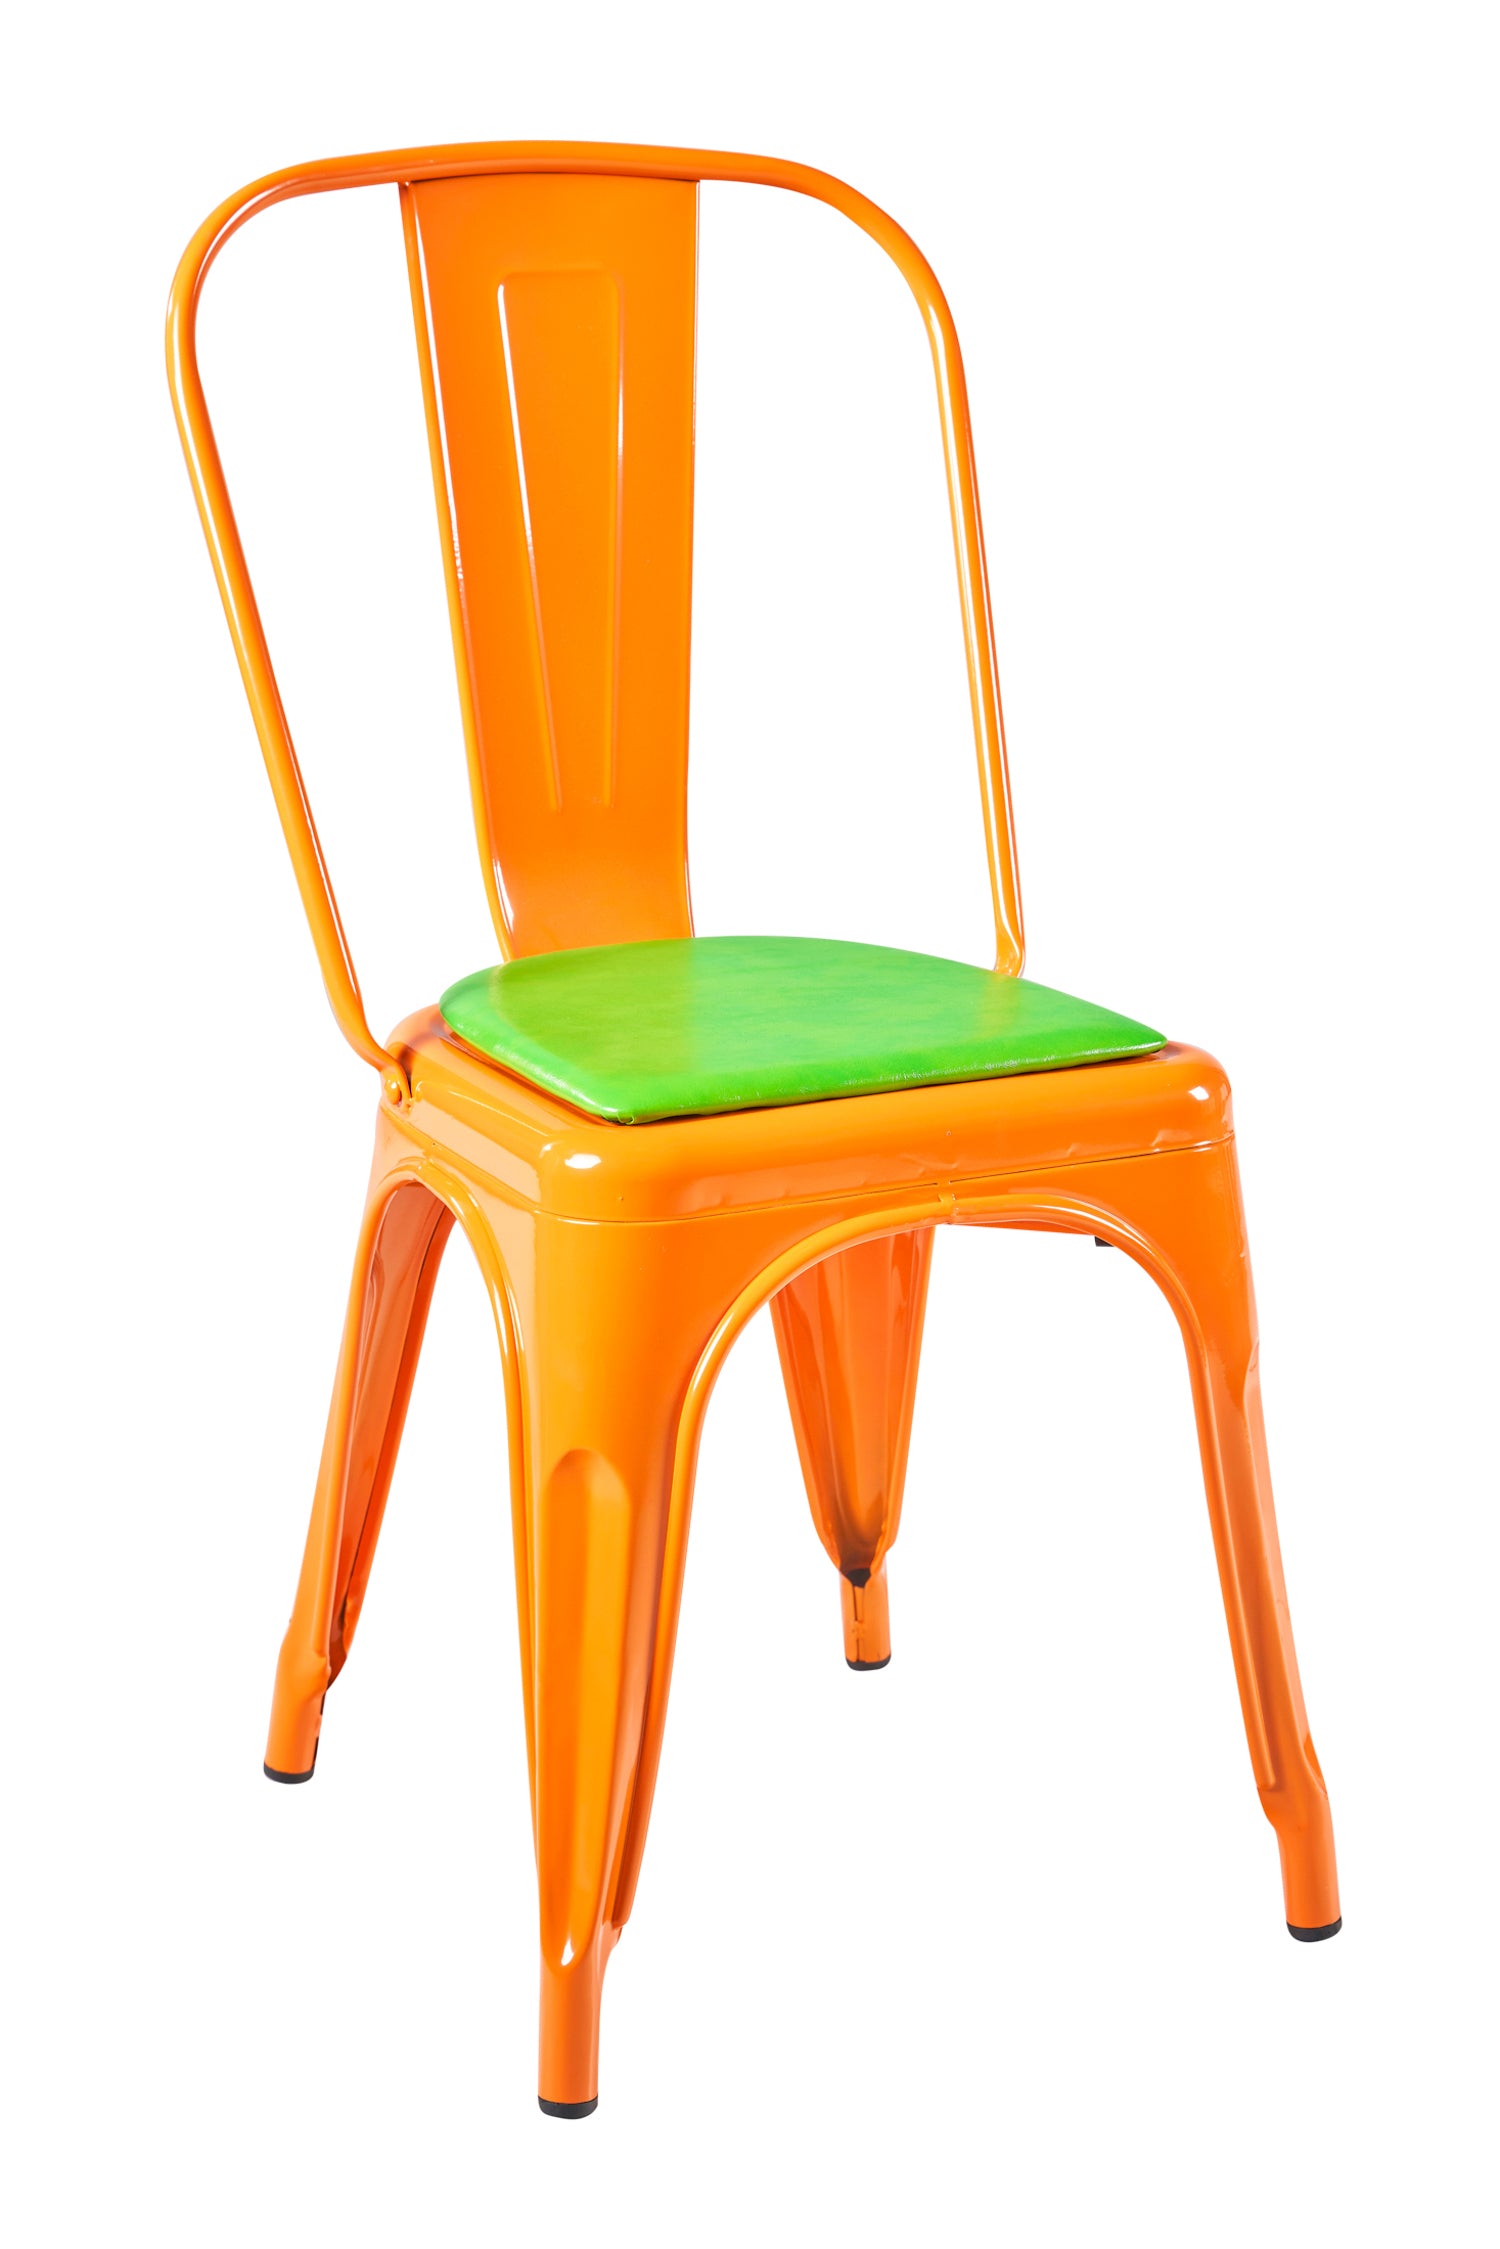 Novita home_AK-32/OG_Cindy - sedia arancio con cuscino verde_1